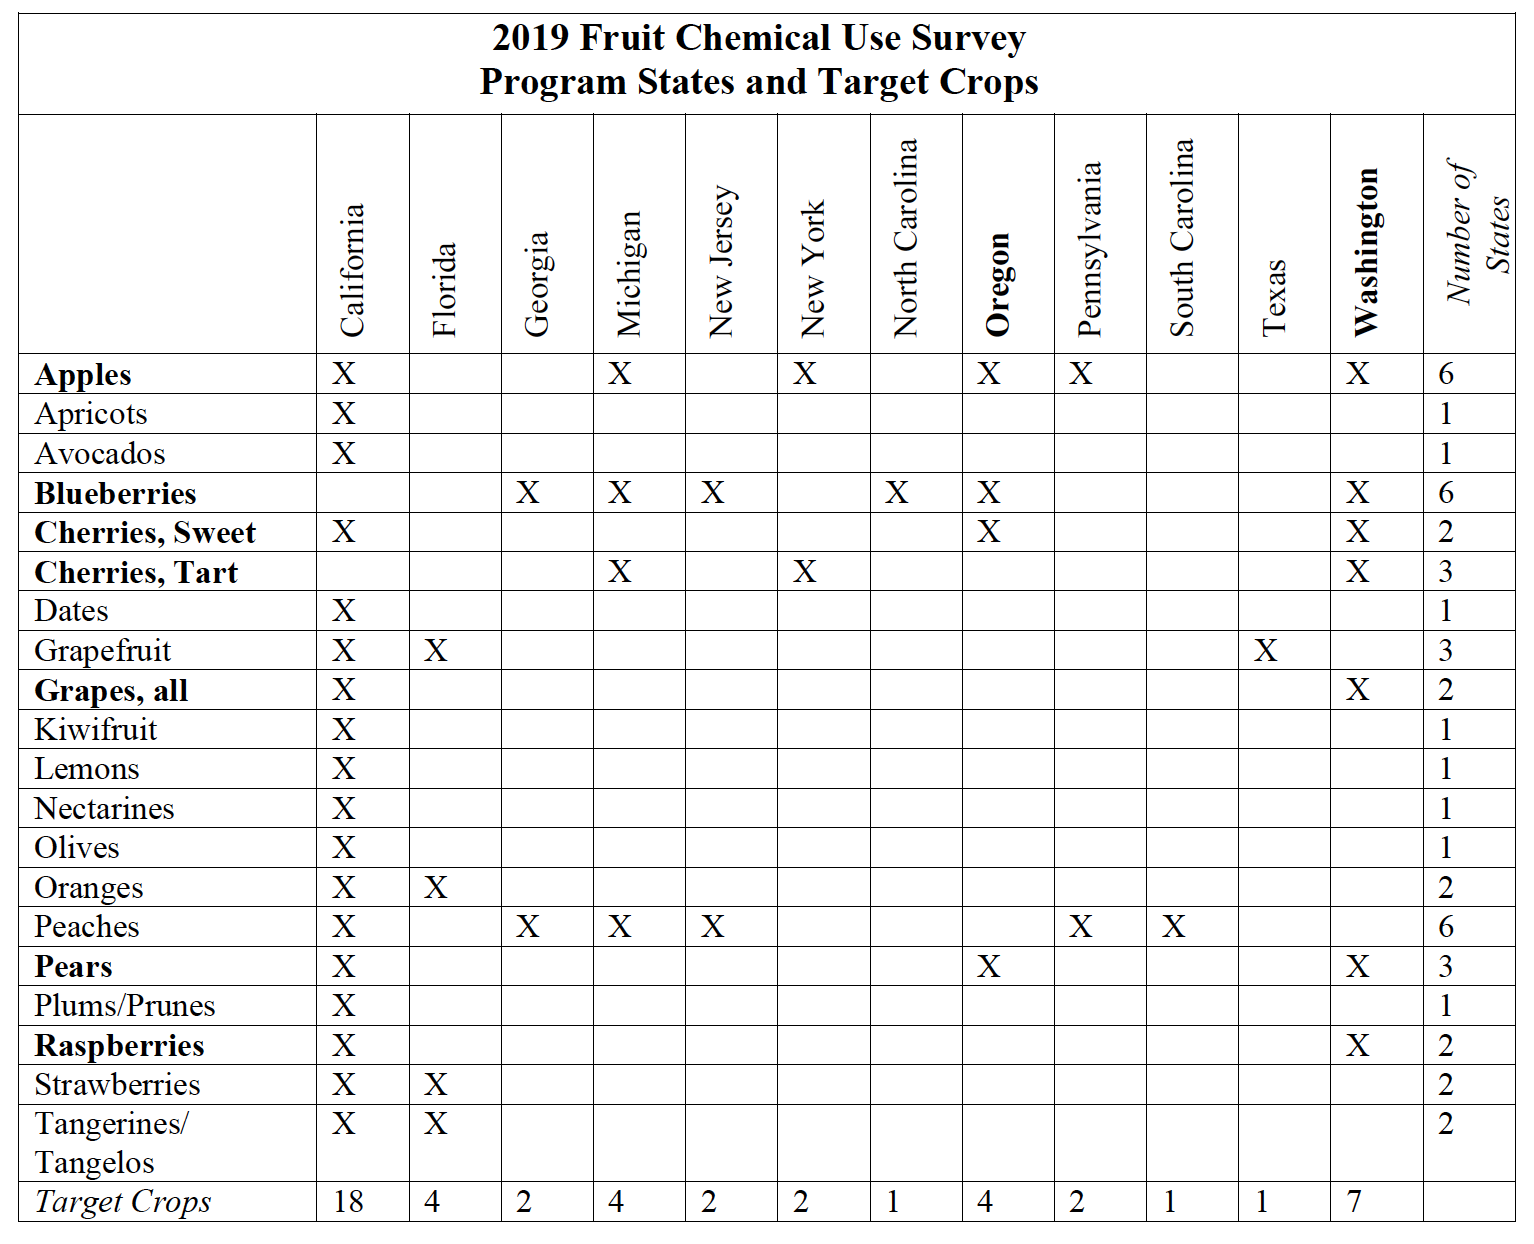 USDA NASS survey